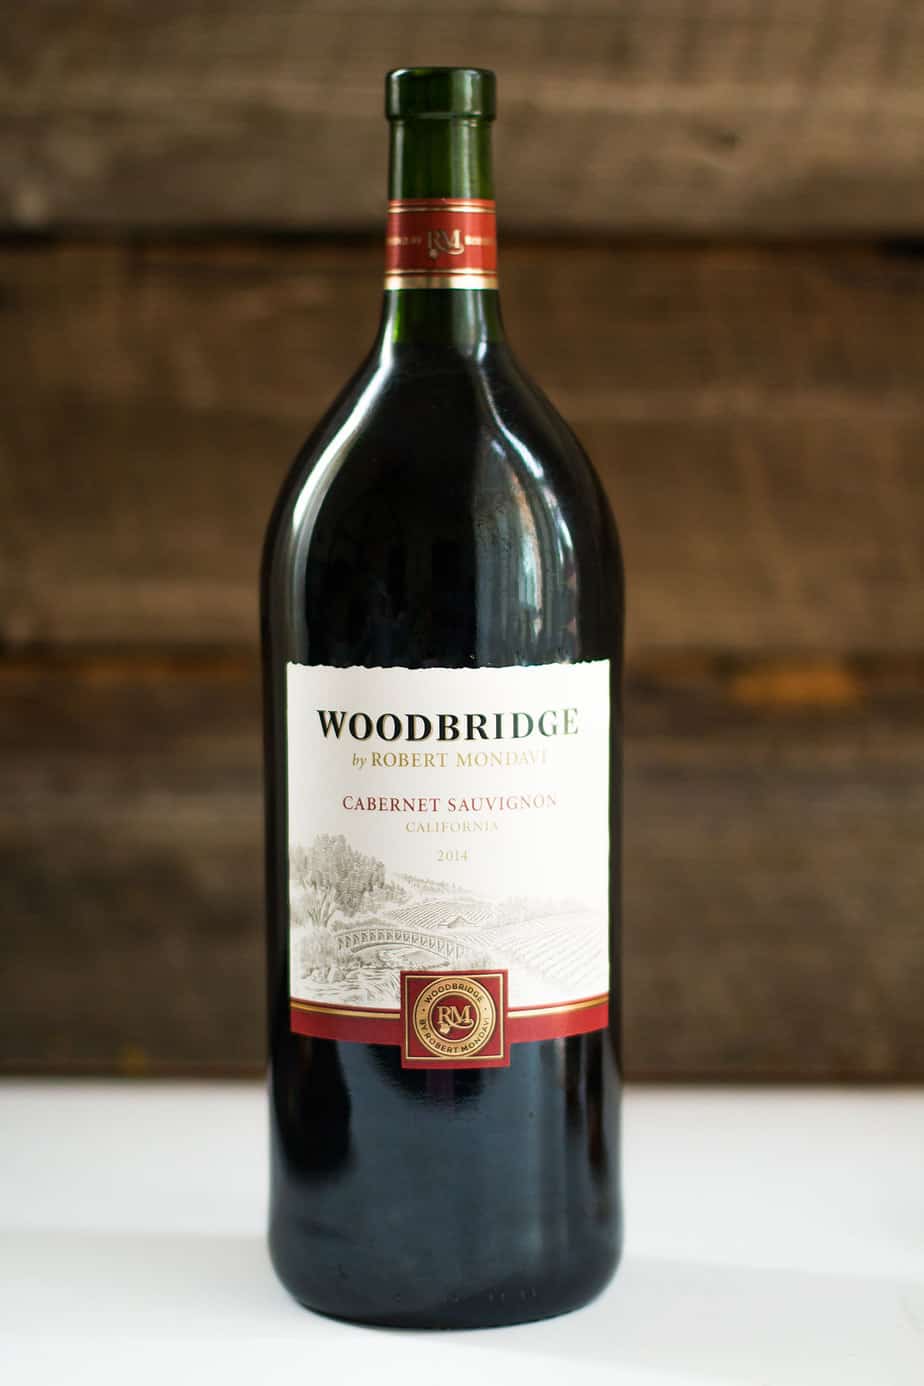 woodbridge cabernet sauvignon